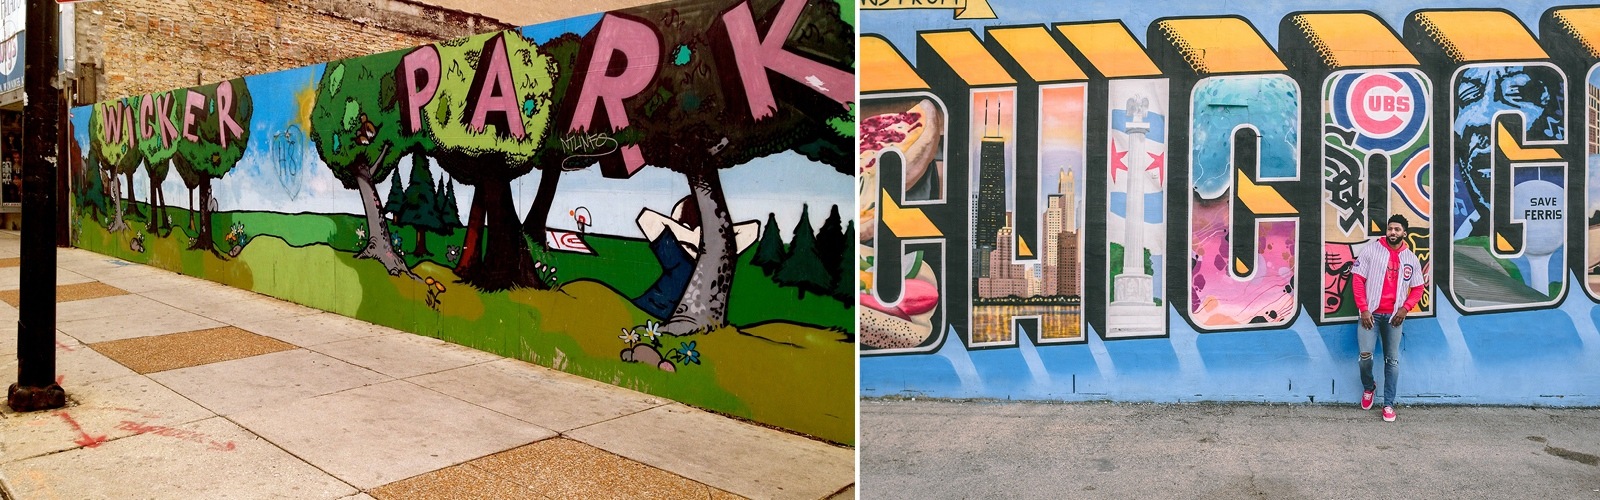 Chicago street art graffiti examples